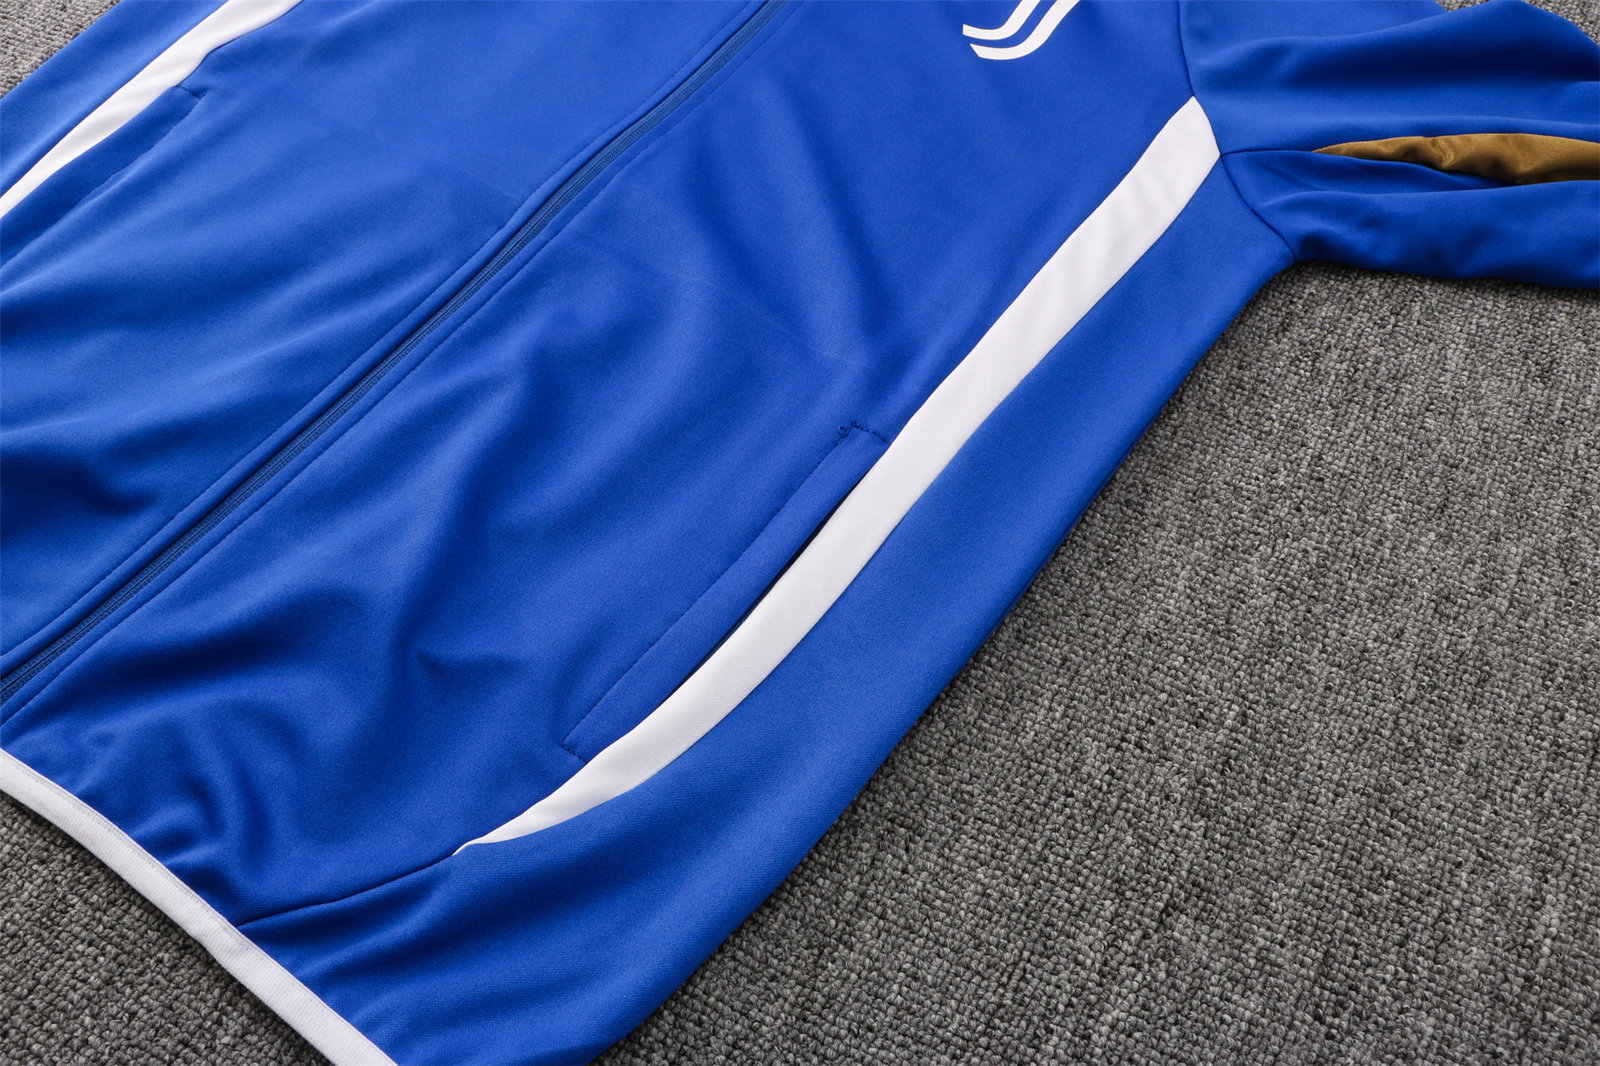 Juventus Soccer Training Suit Jacket + Pants Blue Mens 2021/22